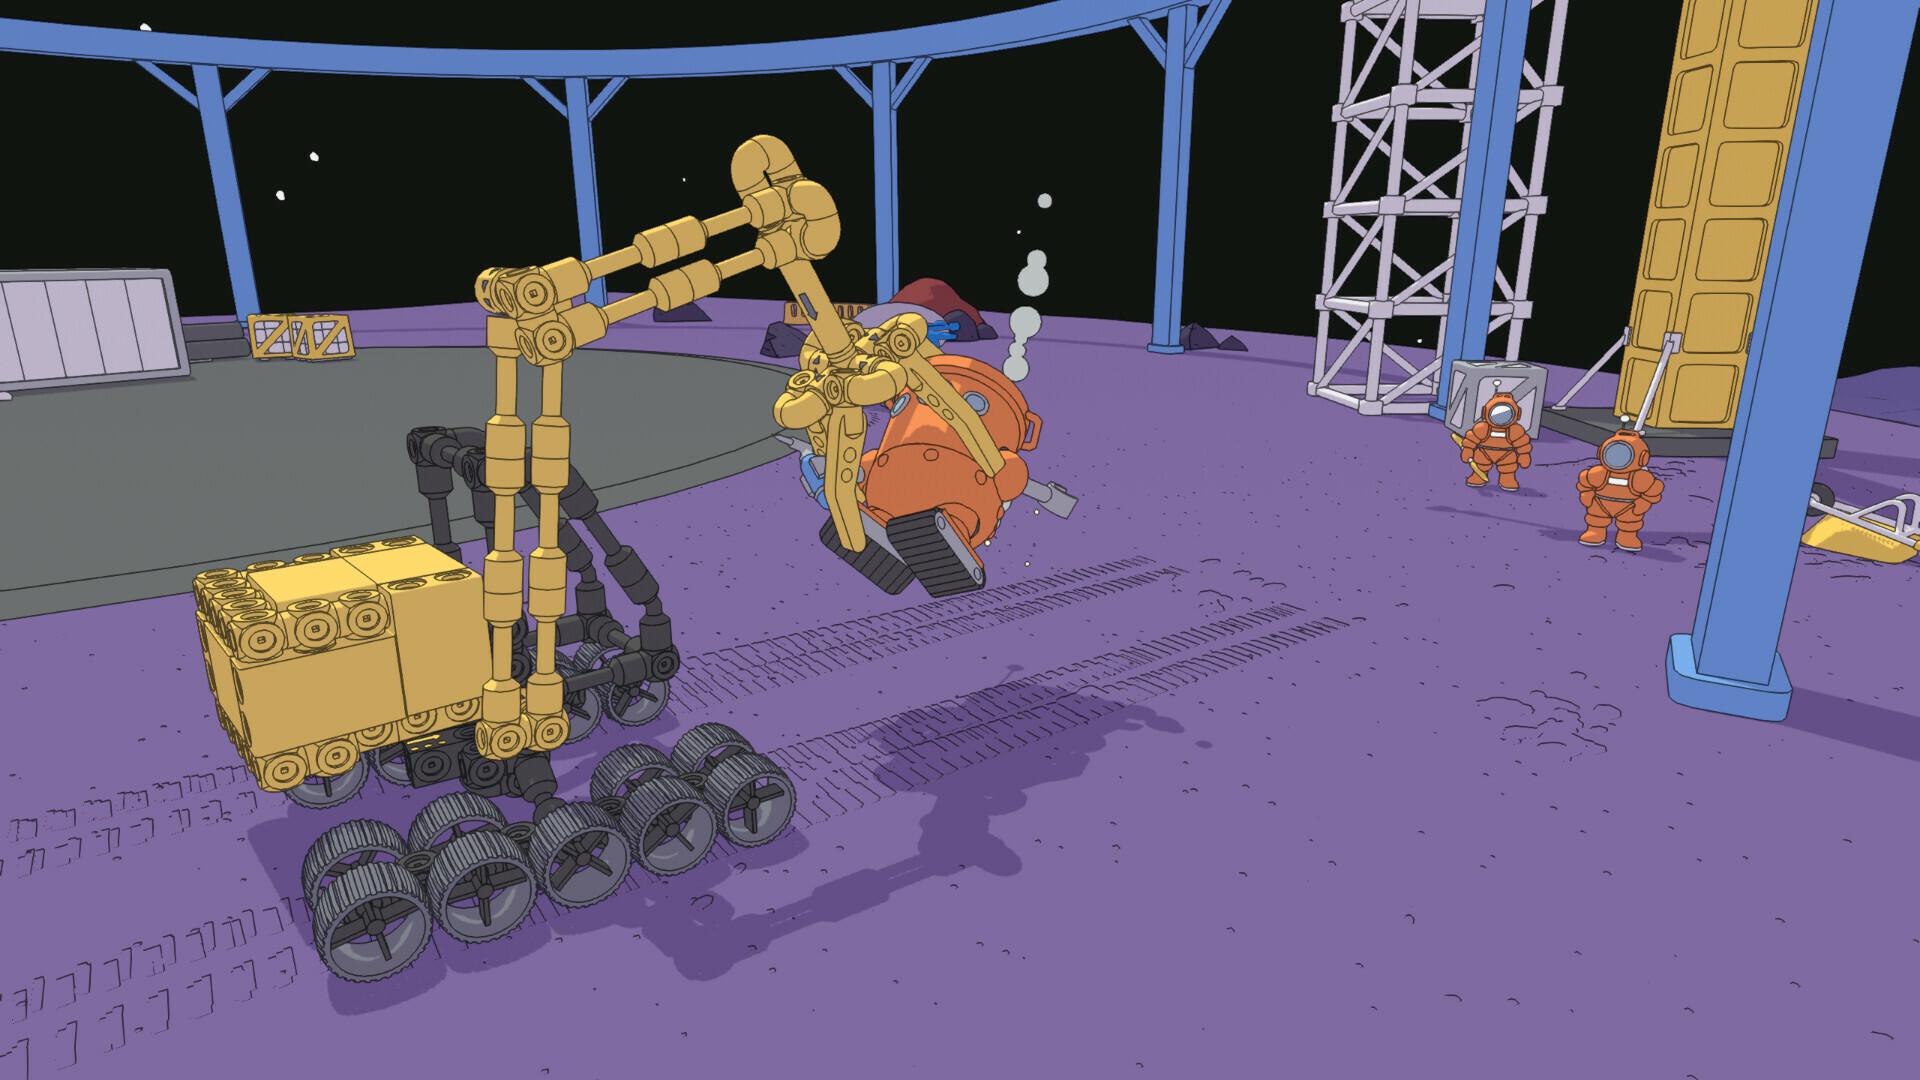 A Mars First Logistics screenshot. In it, a crane lifts a robot as astronauts look on.